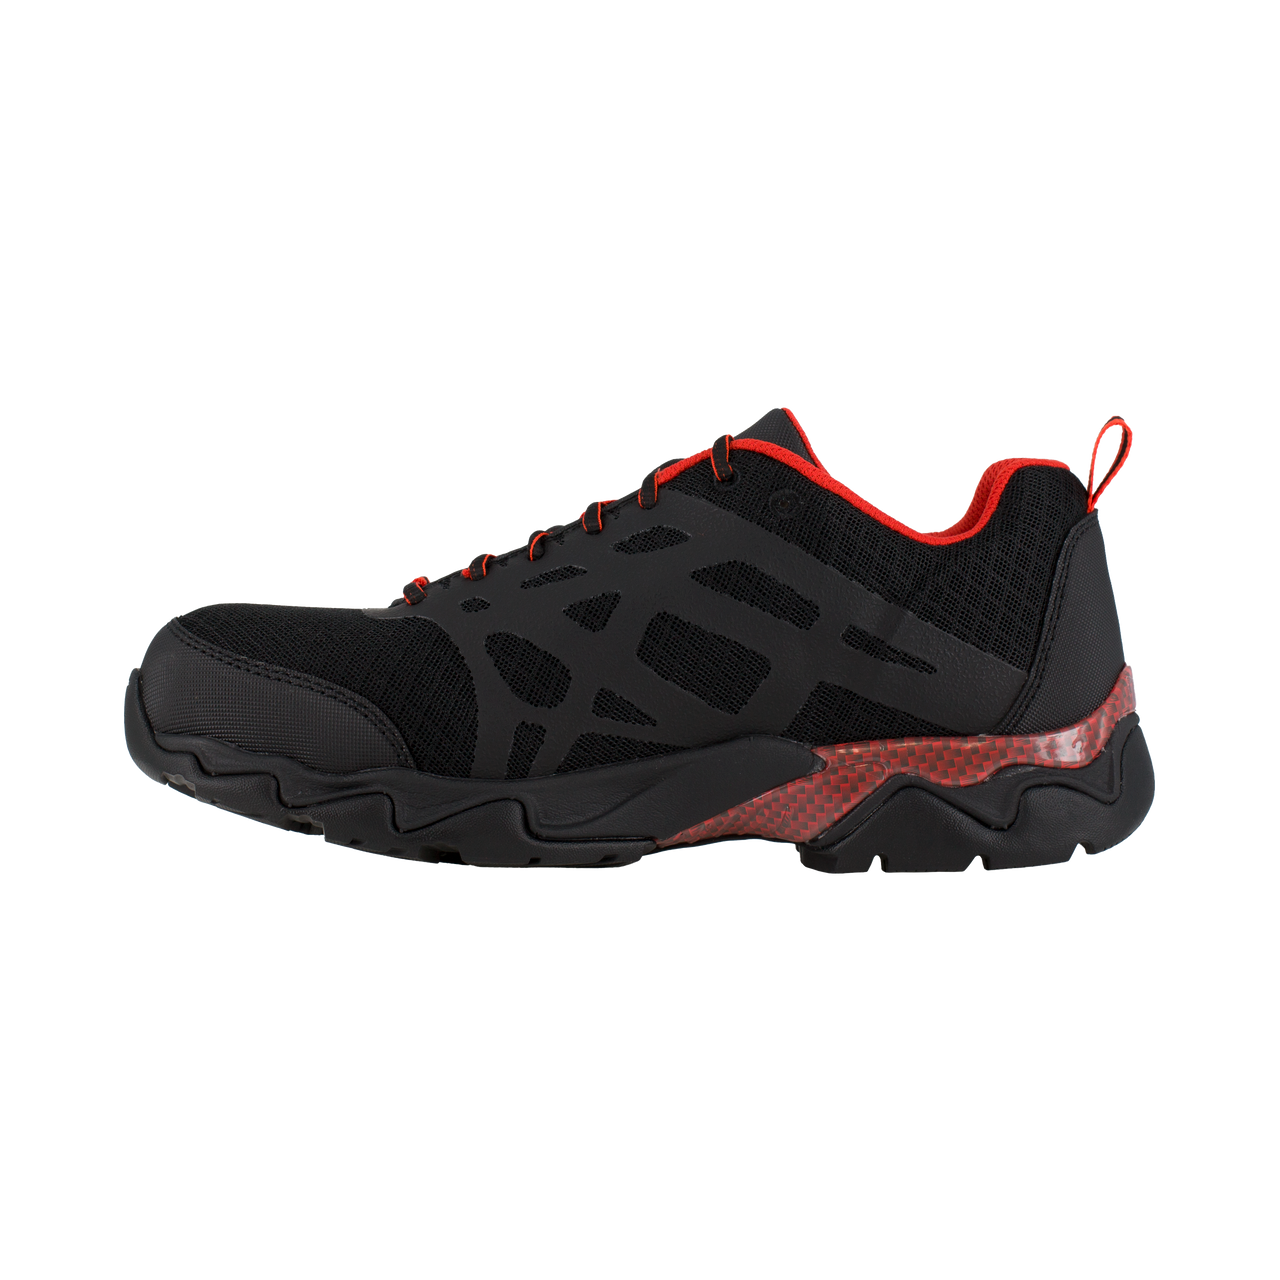 Reebok Work RB1061 Men's Beamer Black/Red Oxford Composite Toe Work Shoes 